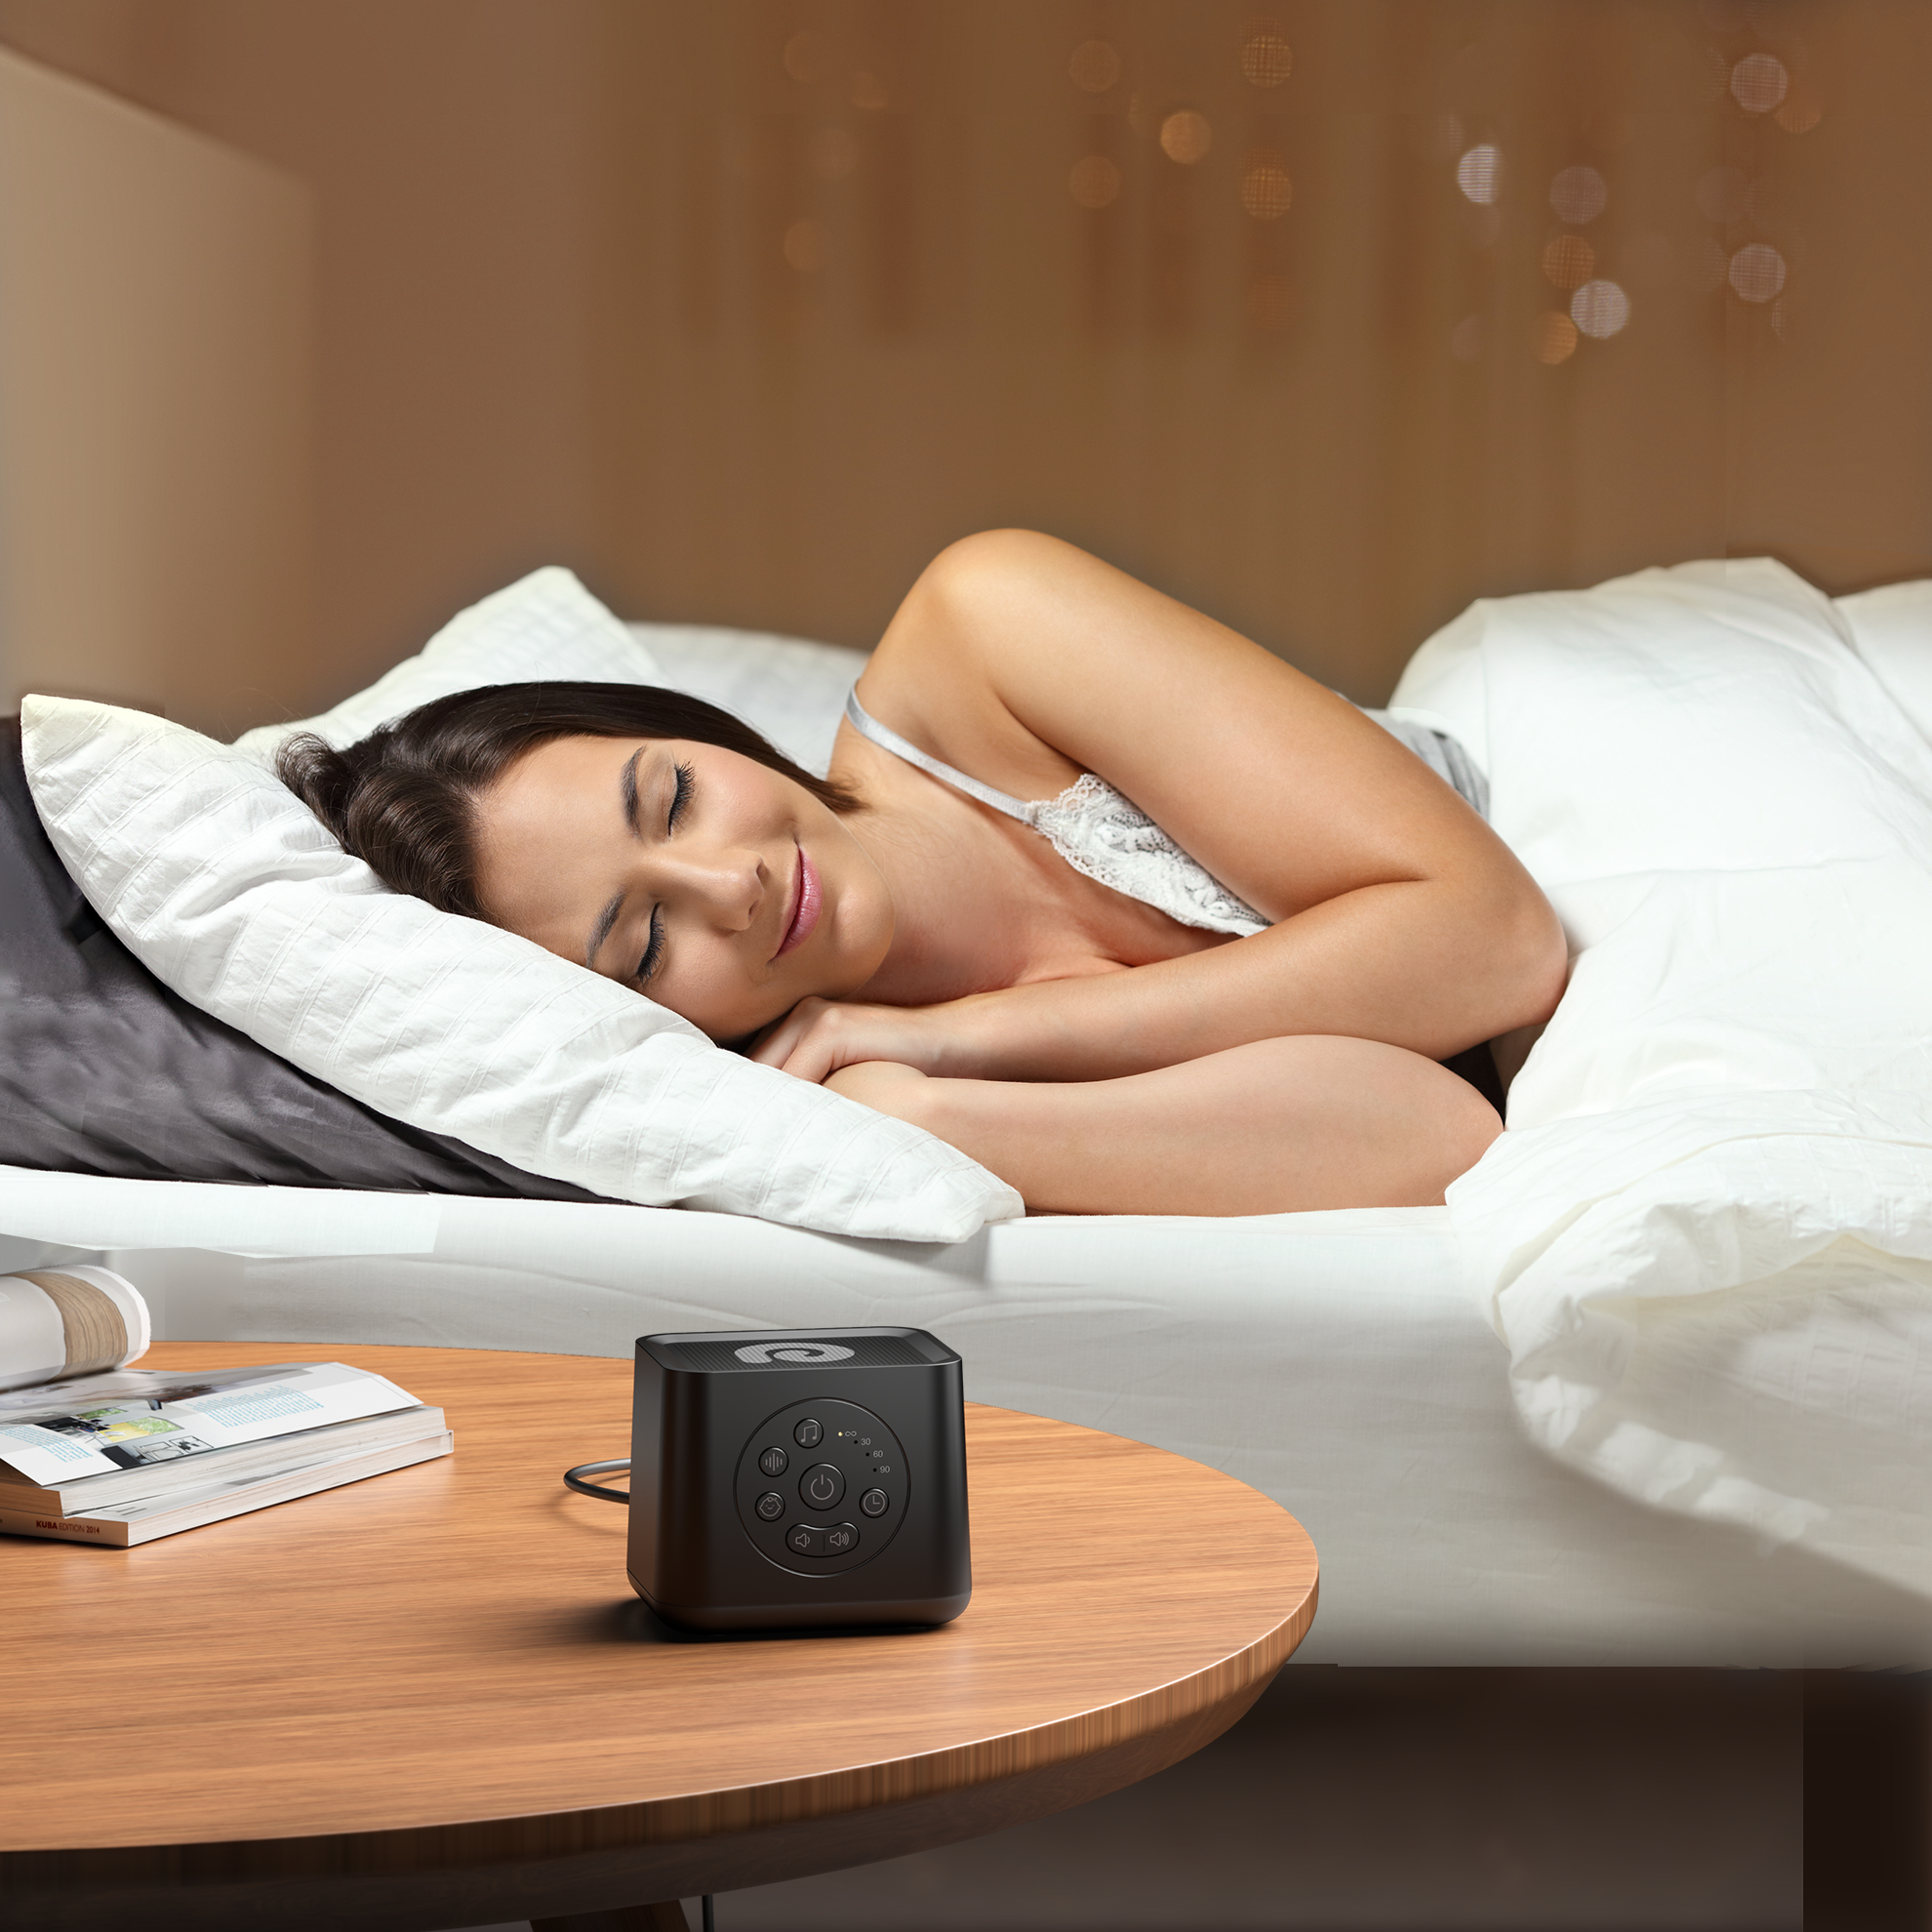 DreamEgg Deep Sleep Therapy White Noise Sound Machine HFD-W02